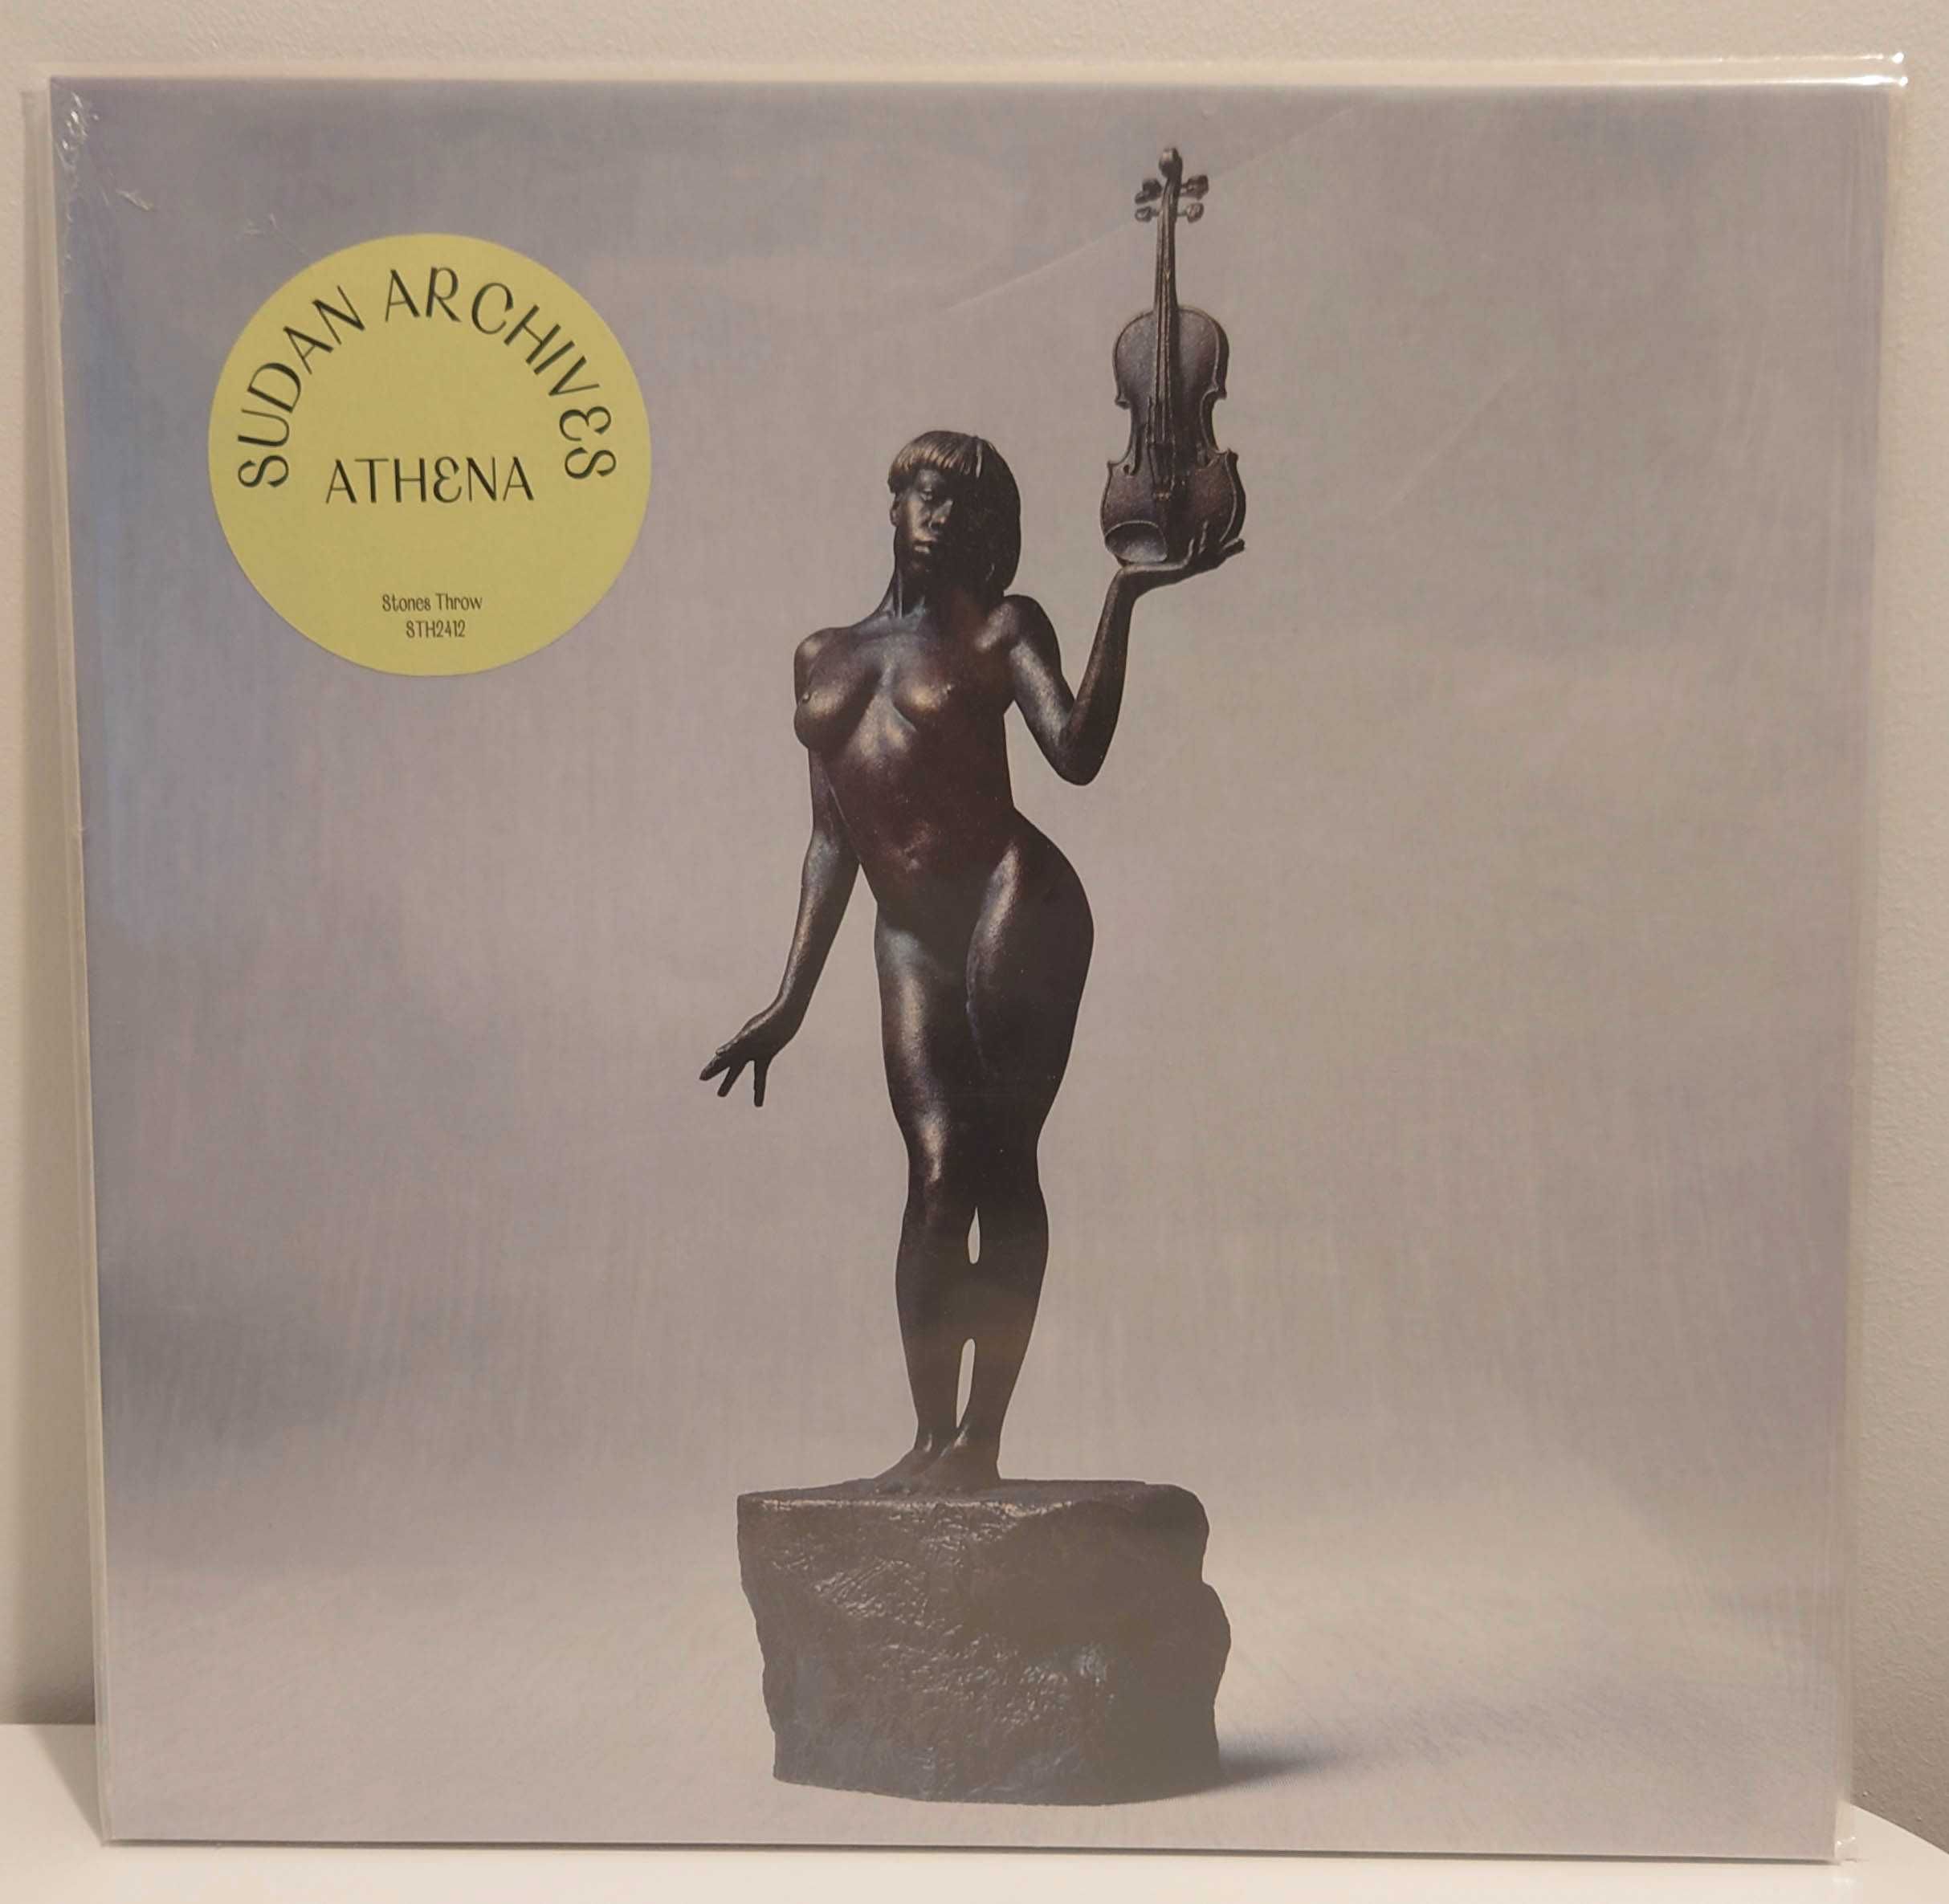 Sudan Archives - Athena LP Winyl